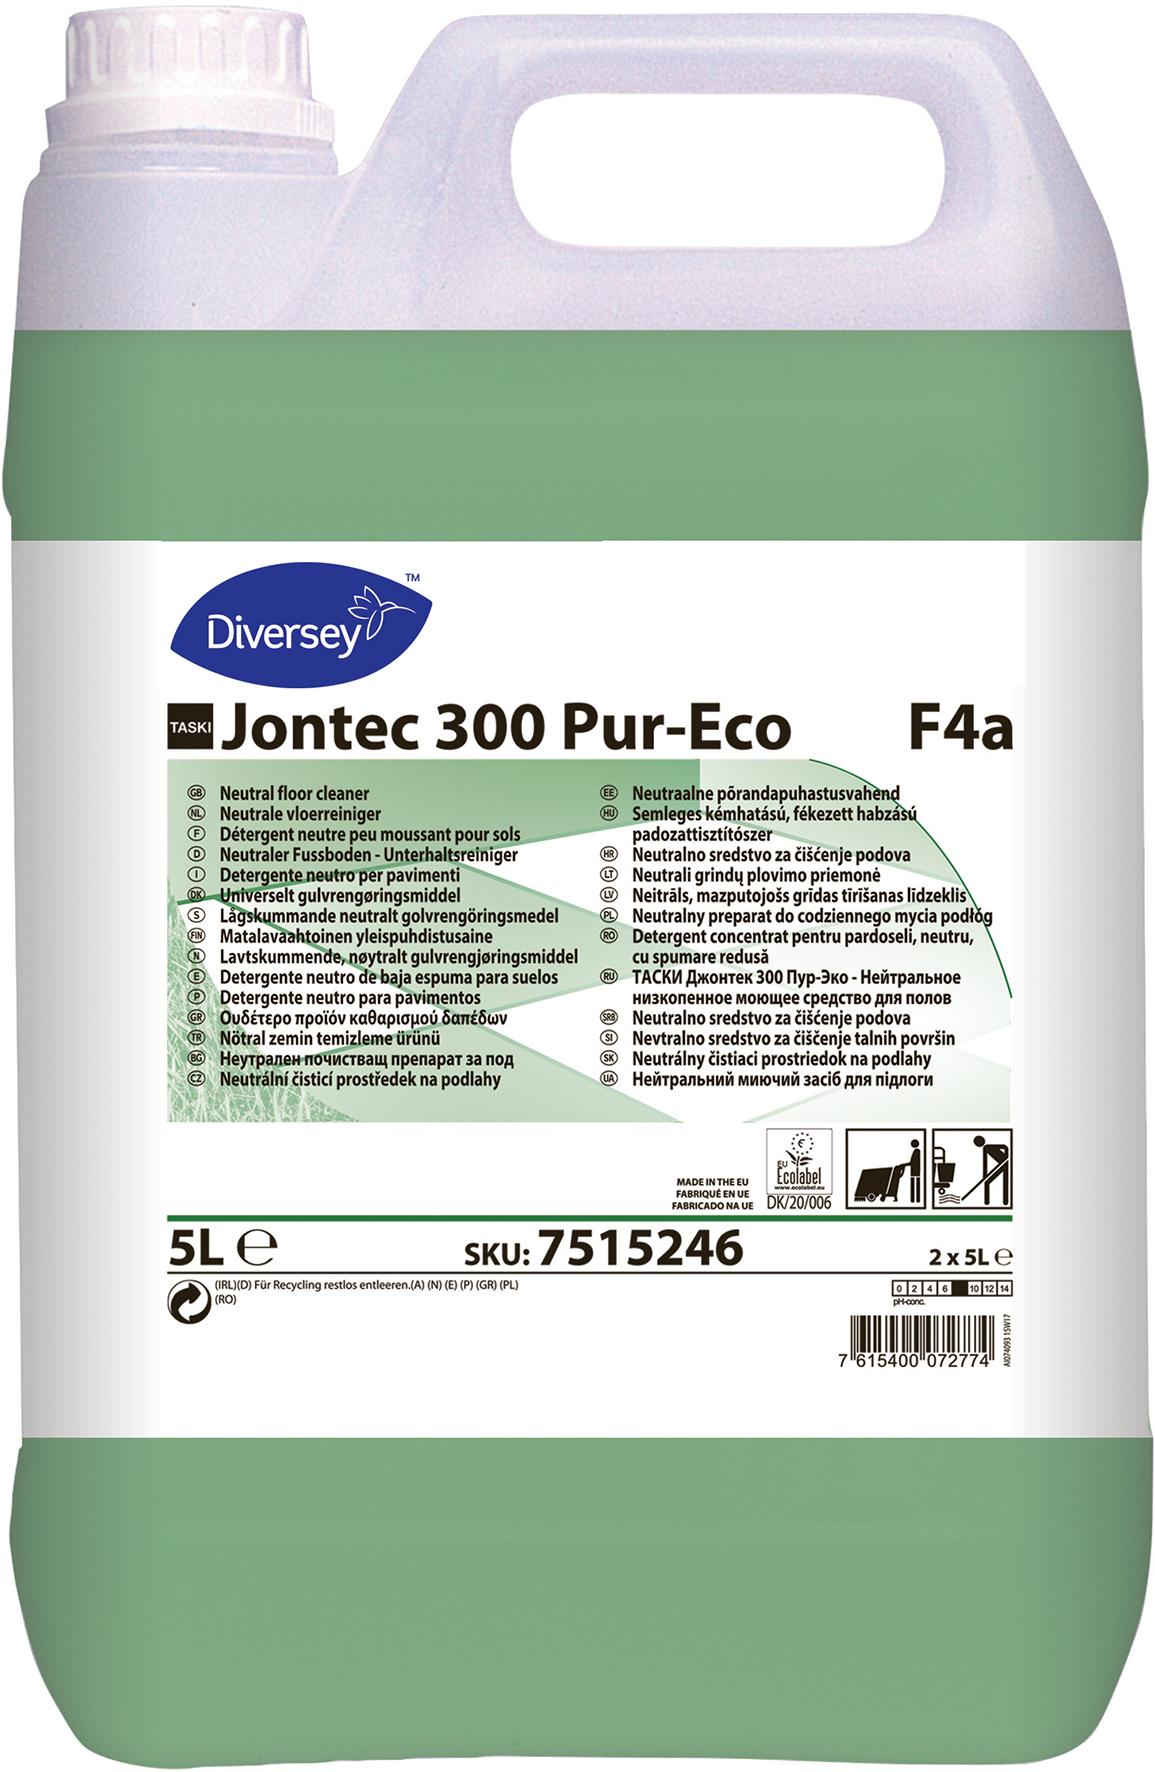 Jontec 300 Pur-Eco